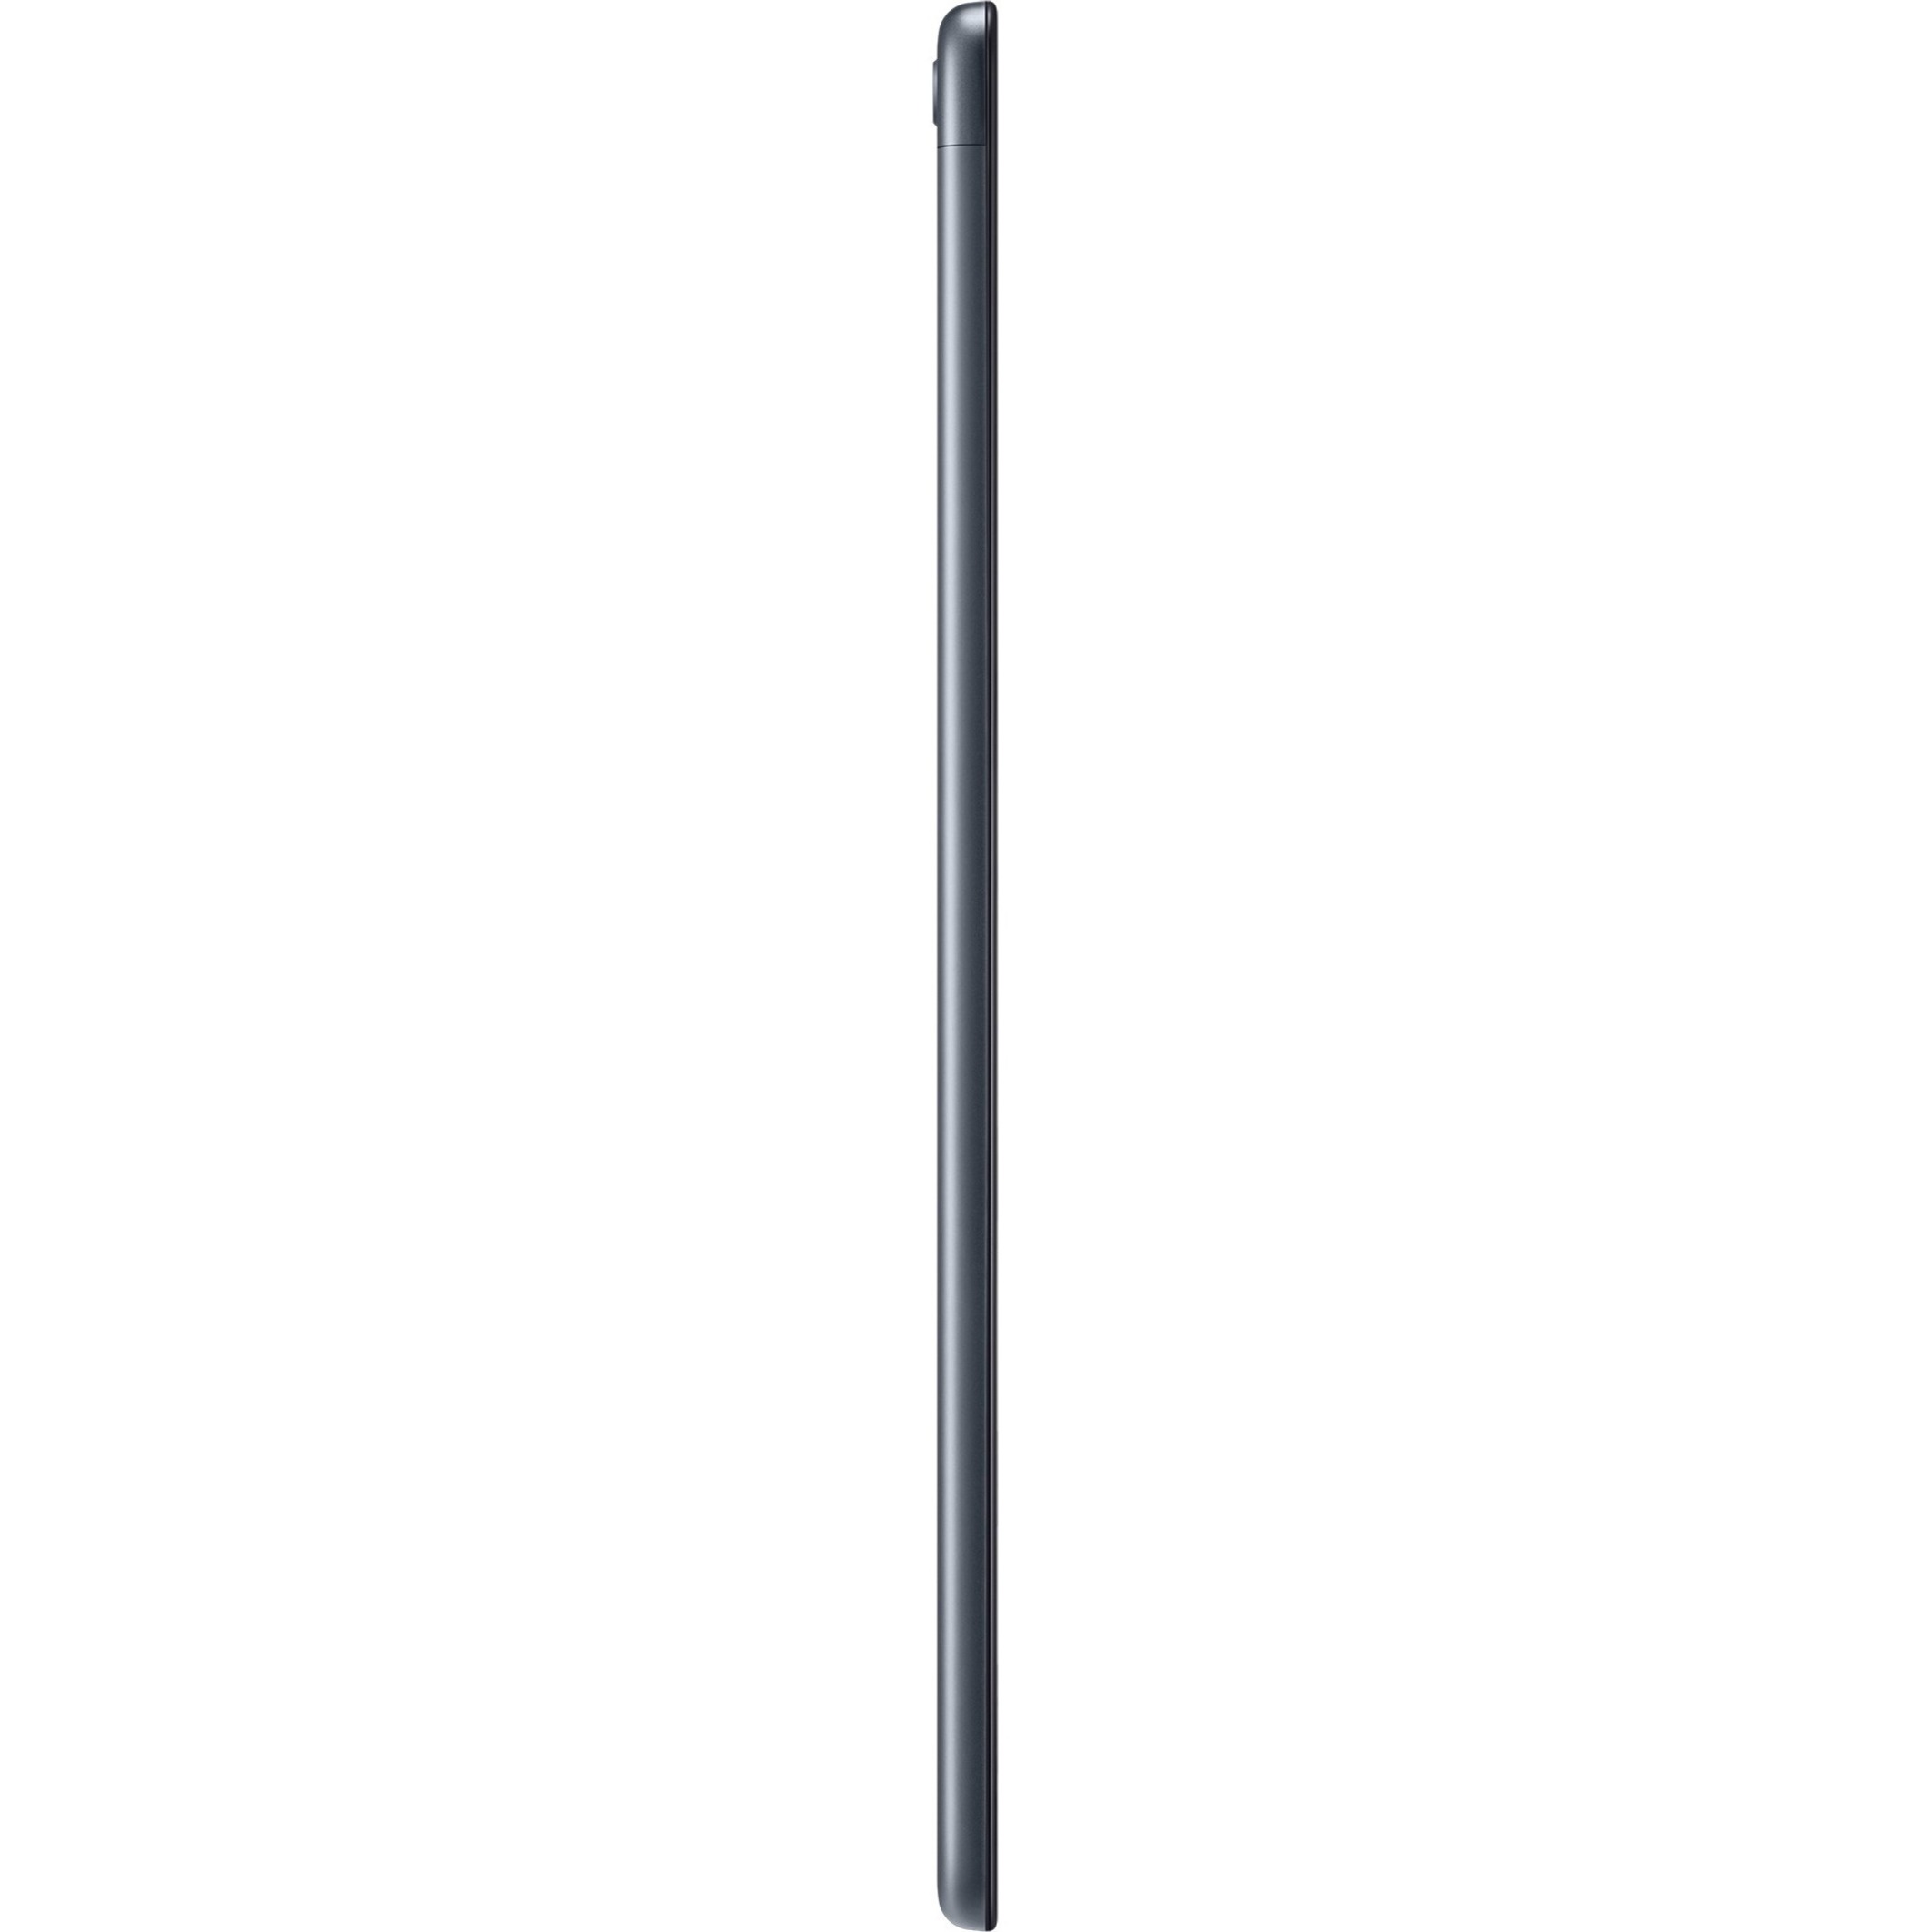 Samsung Galaxy Tab A 10.1 128 GB Wifi Tablet Gold (2019) - image 4 of 20